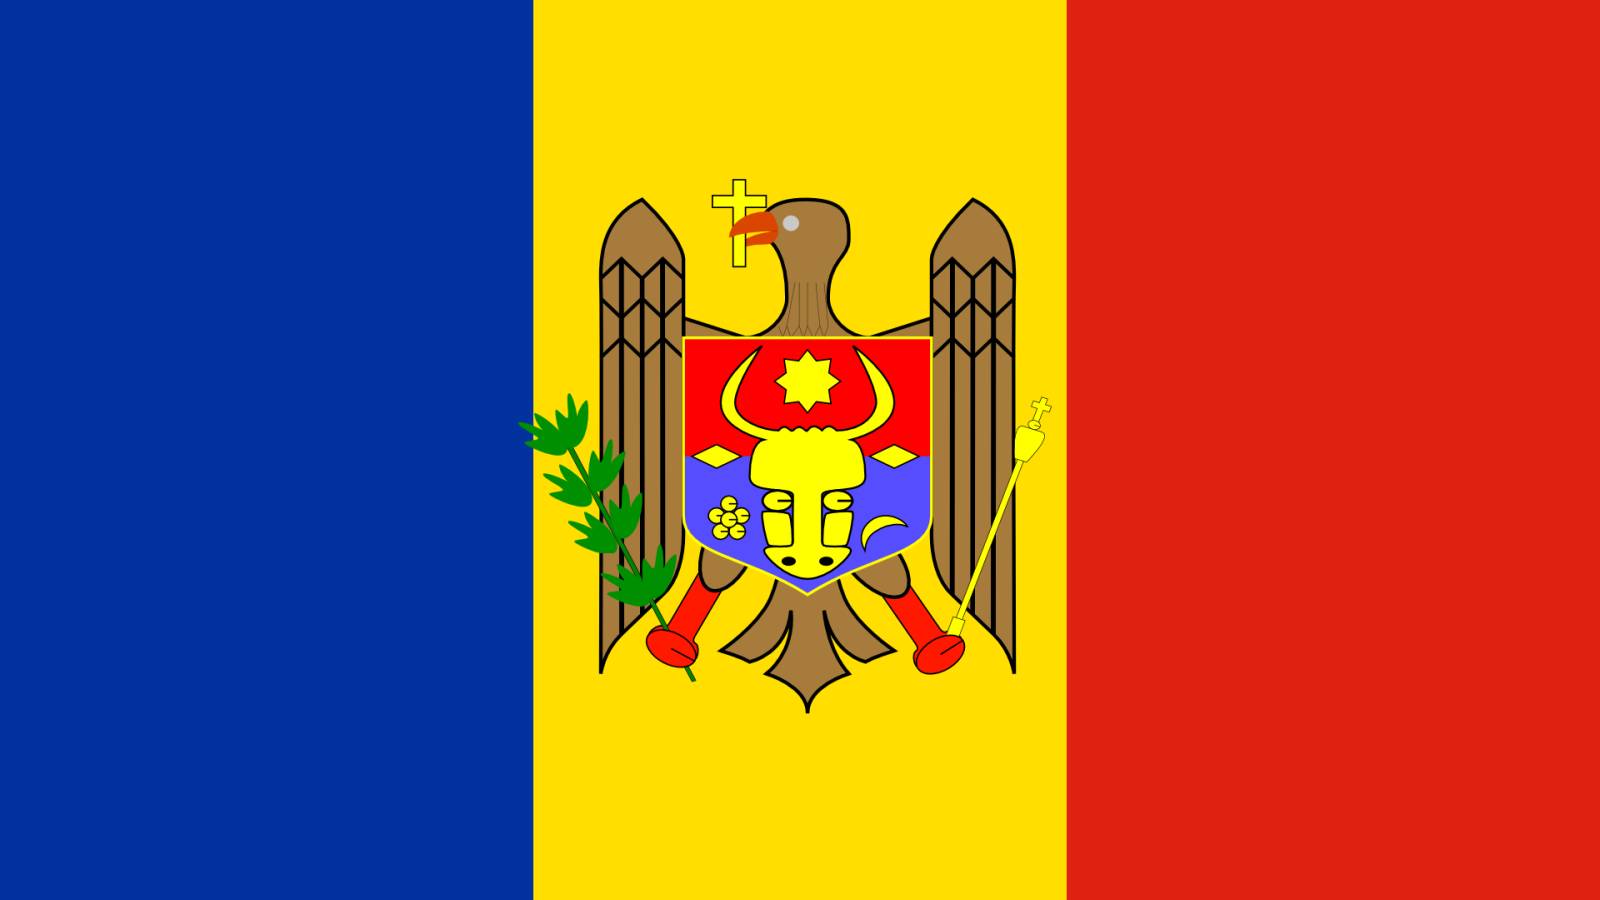 Comisia Europeana Anunt IMPORTANT privind Republica Moldova, Decizia Luata